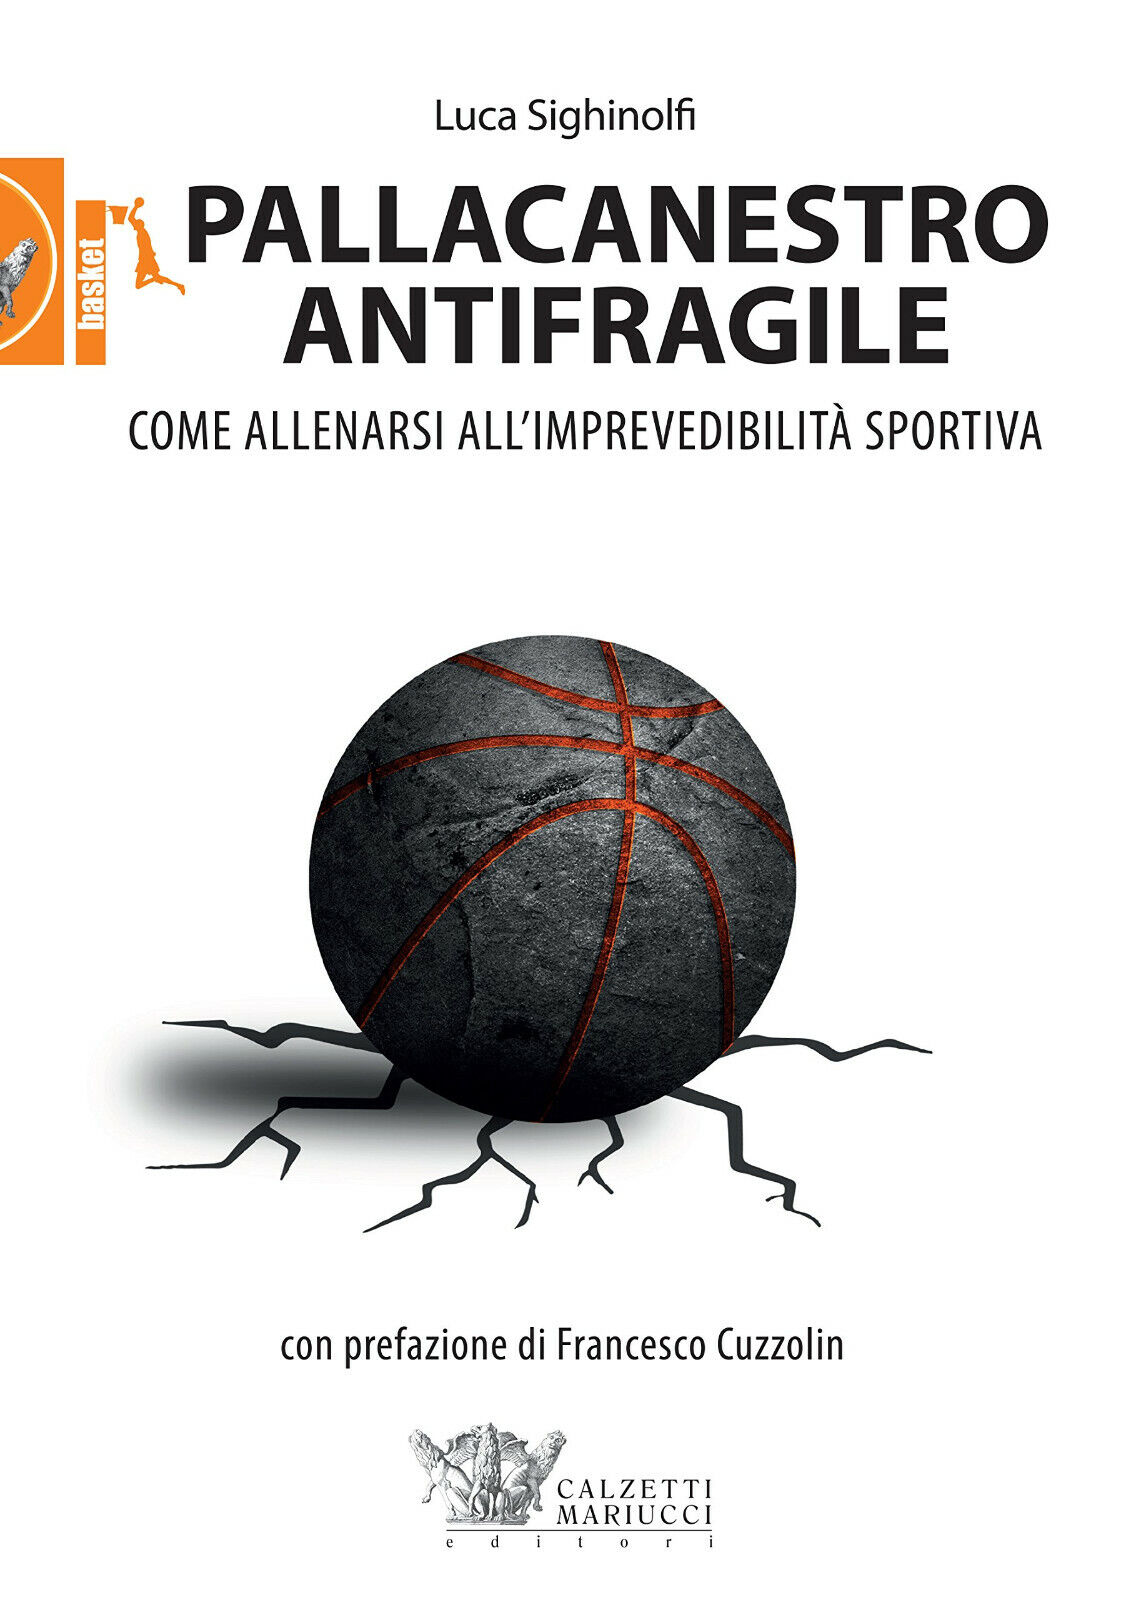 Pallacanestro antifragile - Luca Sighinolfi - Calzetti Mariucci, 2016